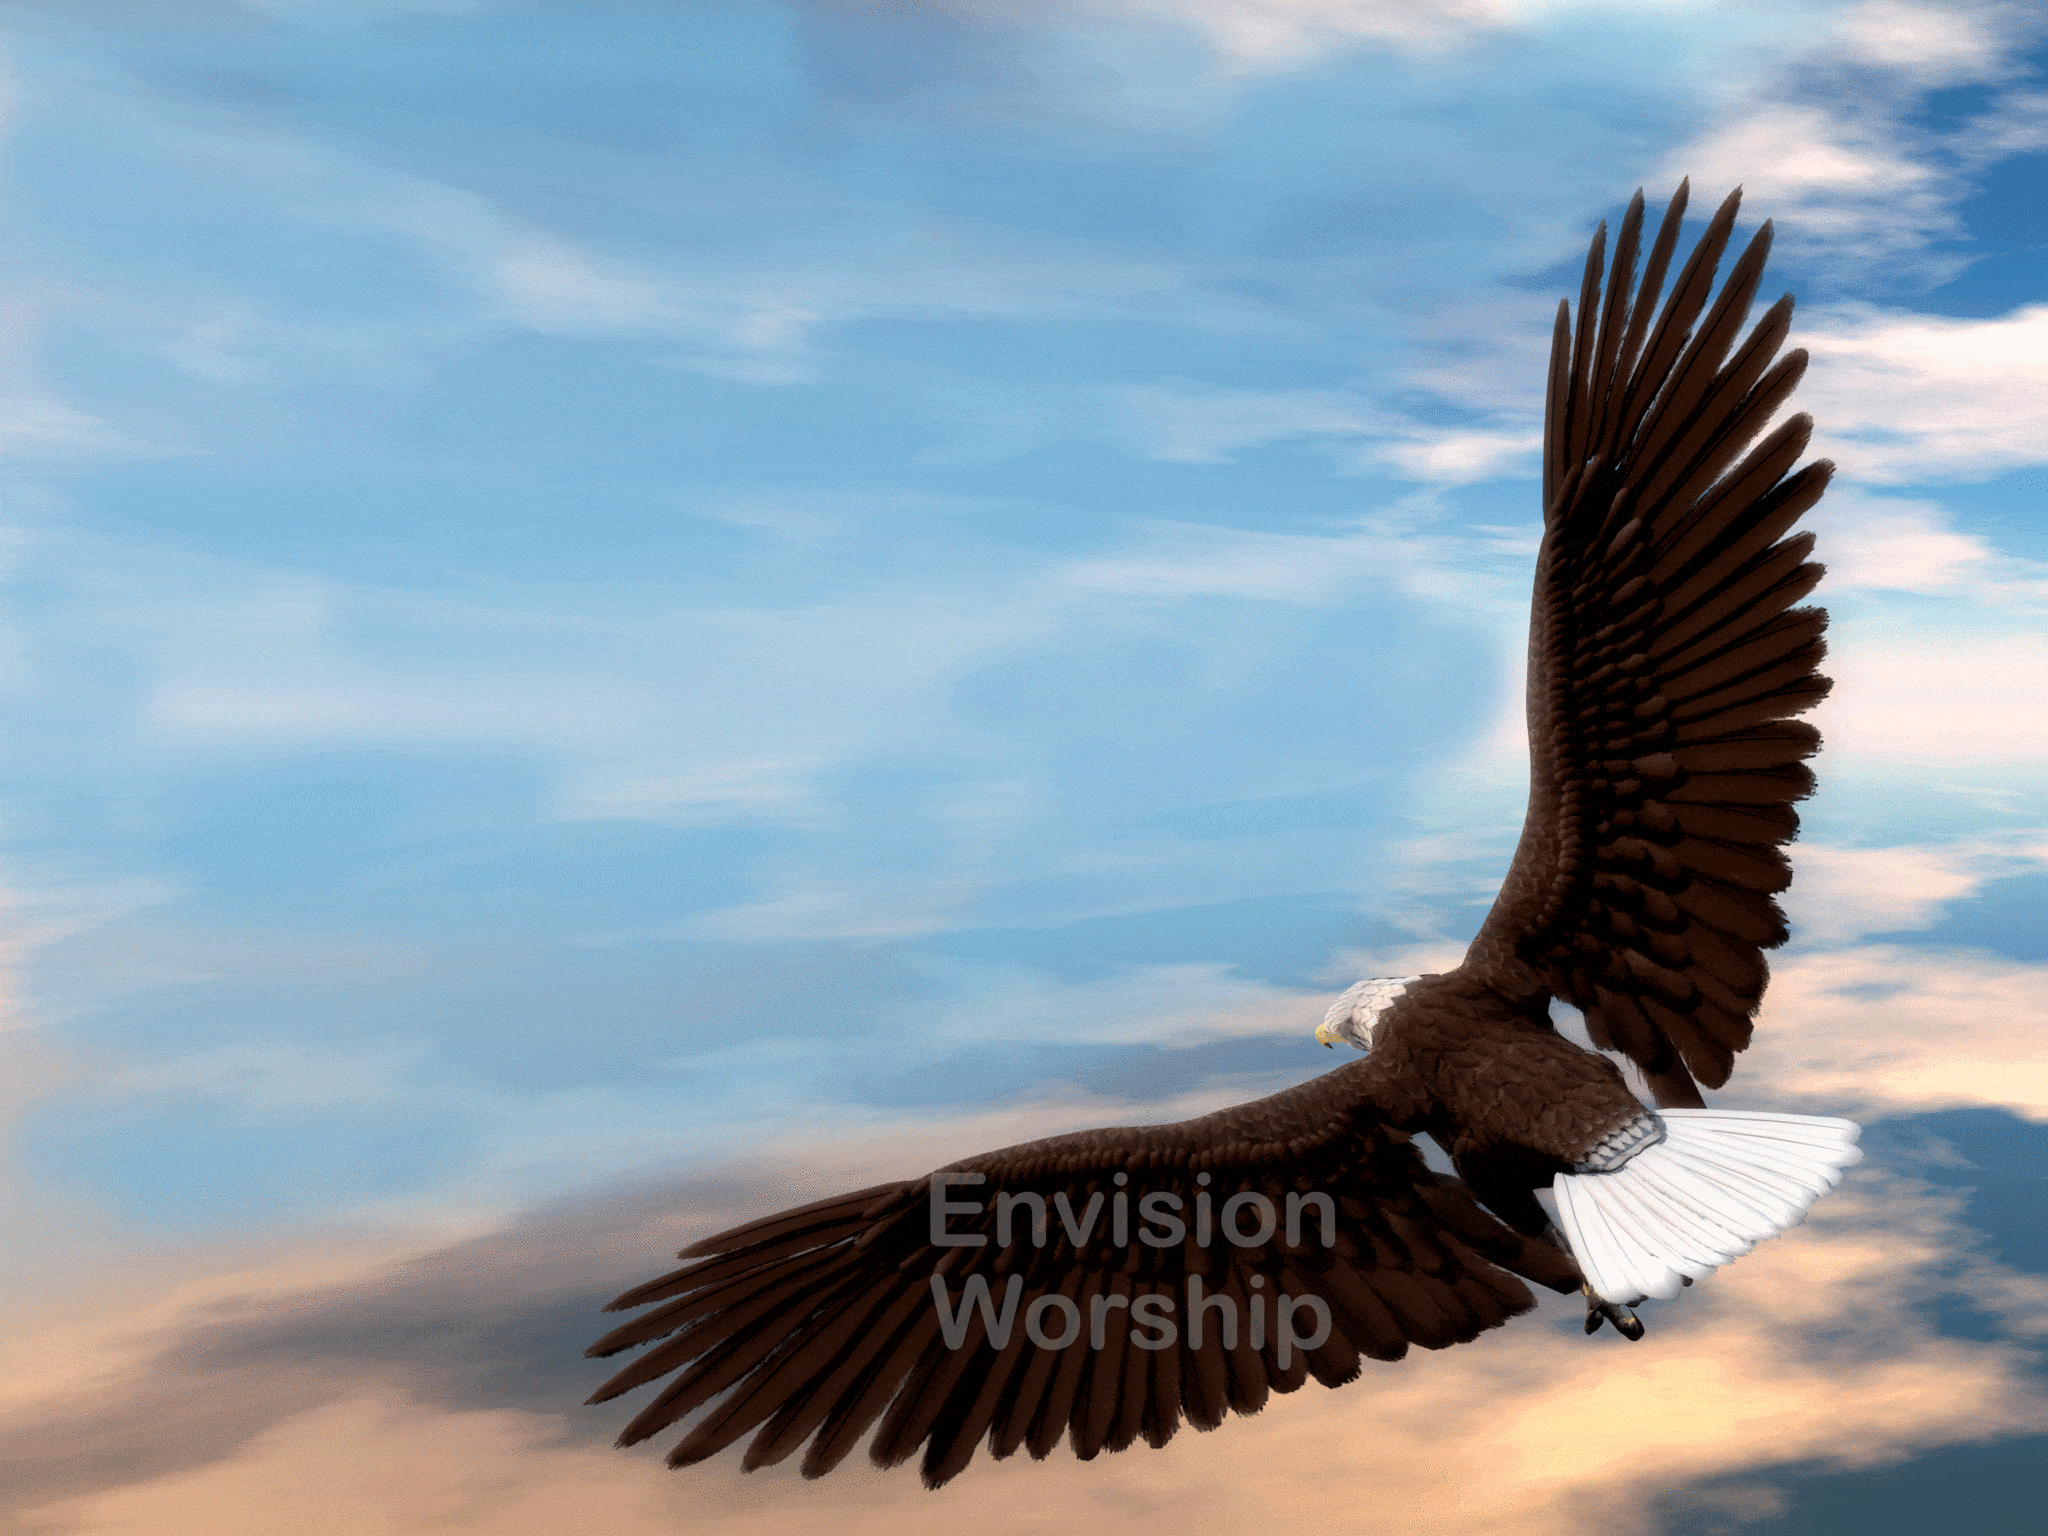 Rejuvenates like eagles - Misión Paz